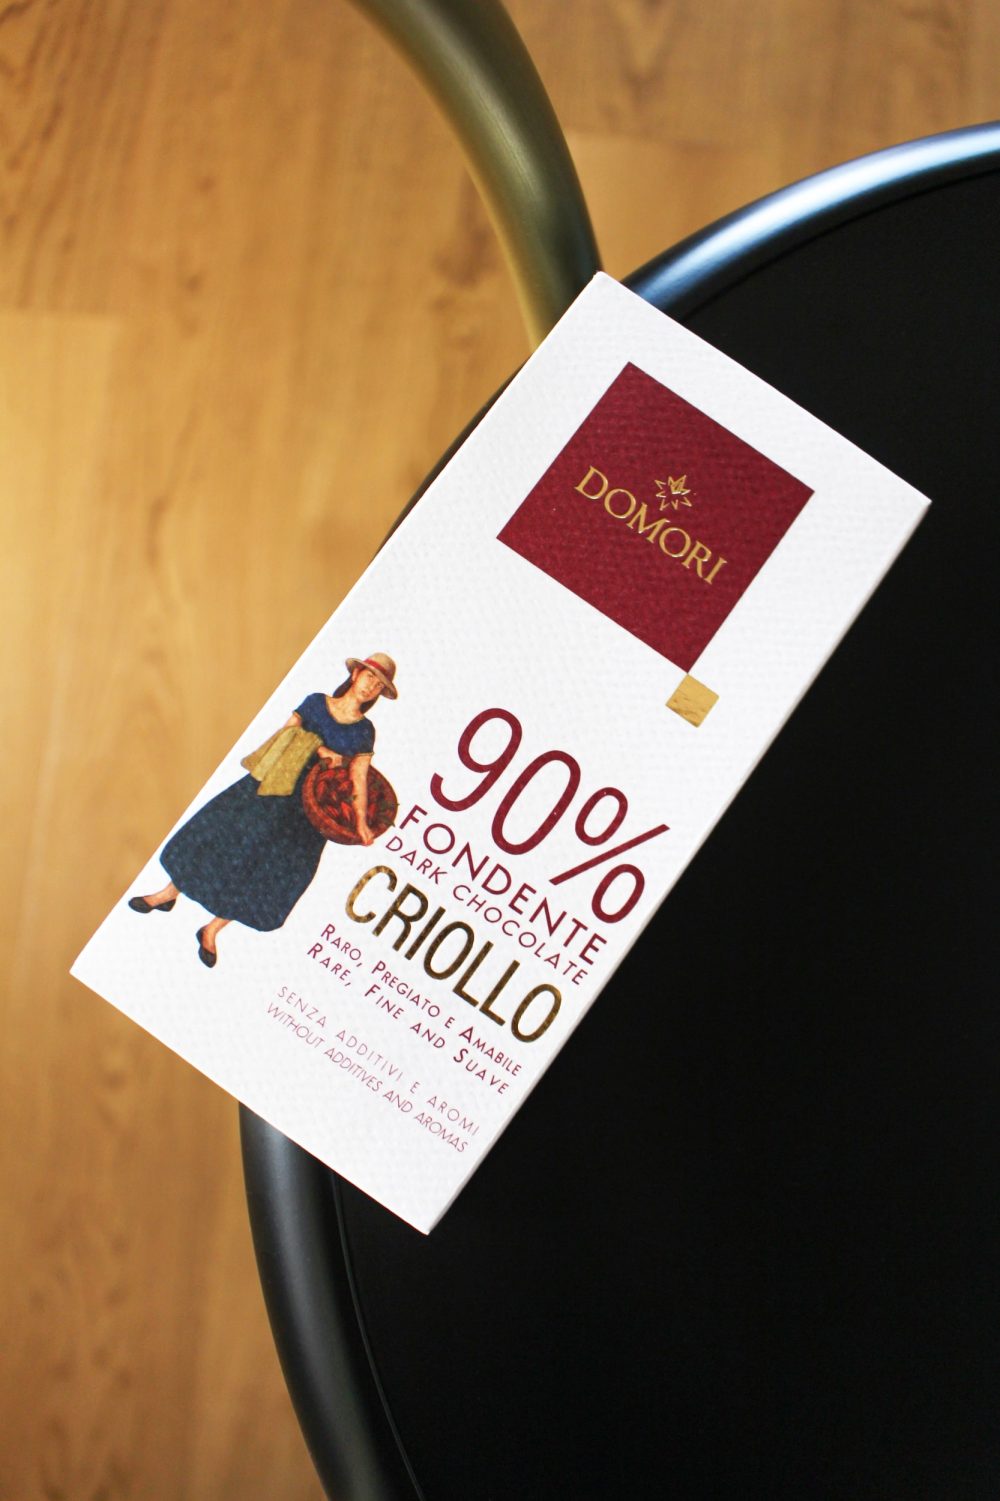 Domori Criollo Blend 90% Dark Chocolate Bar 2